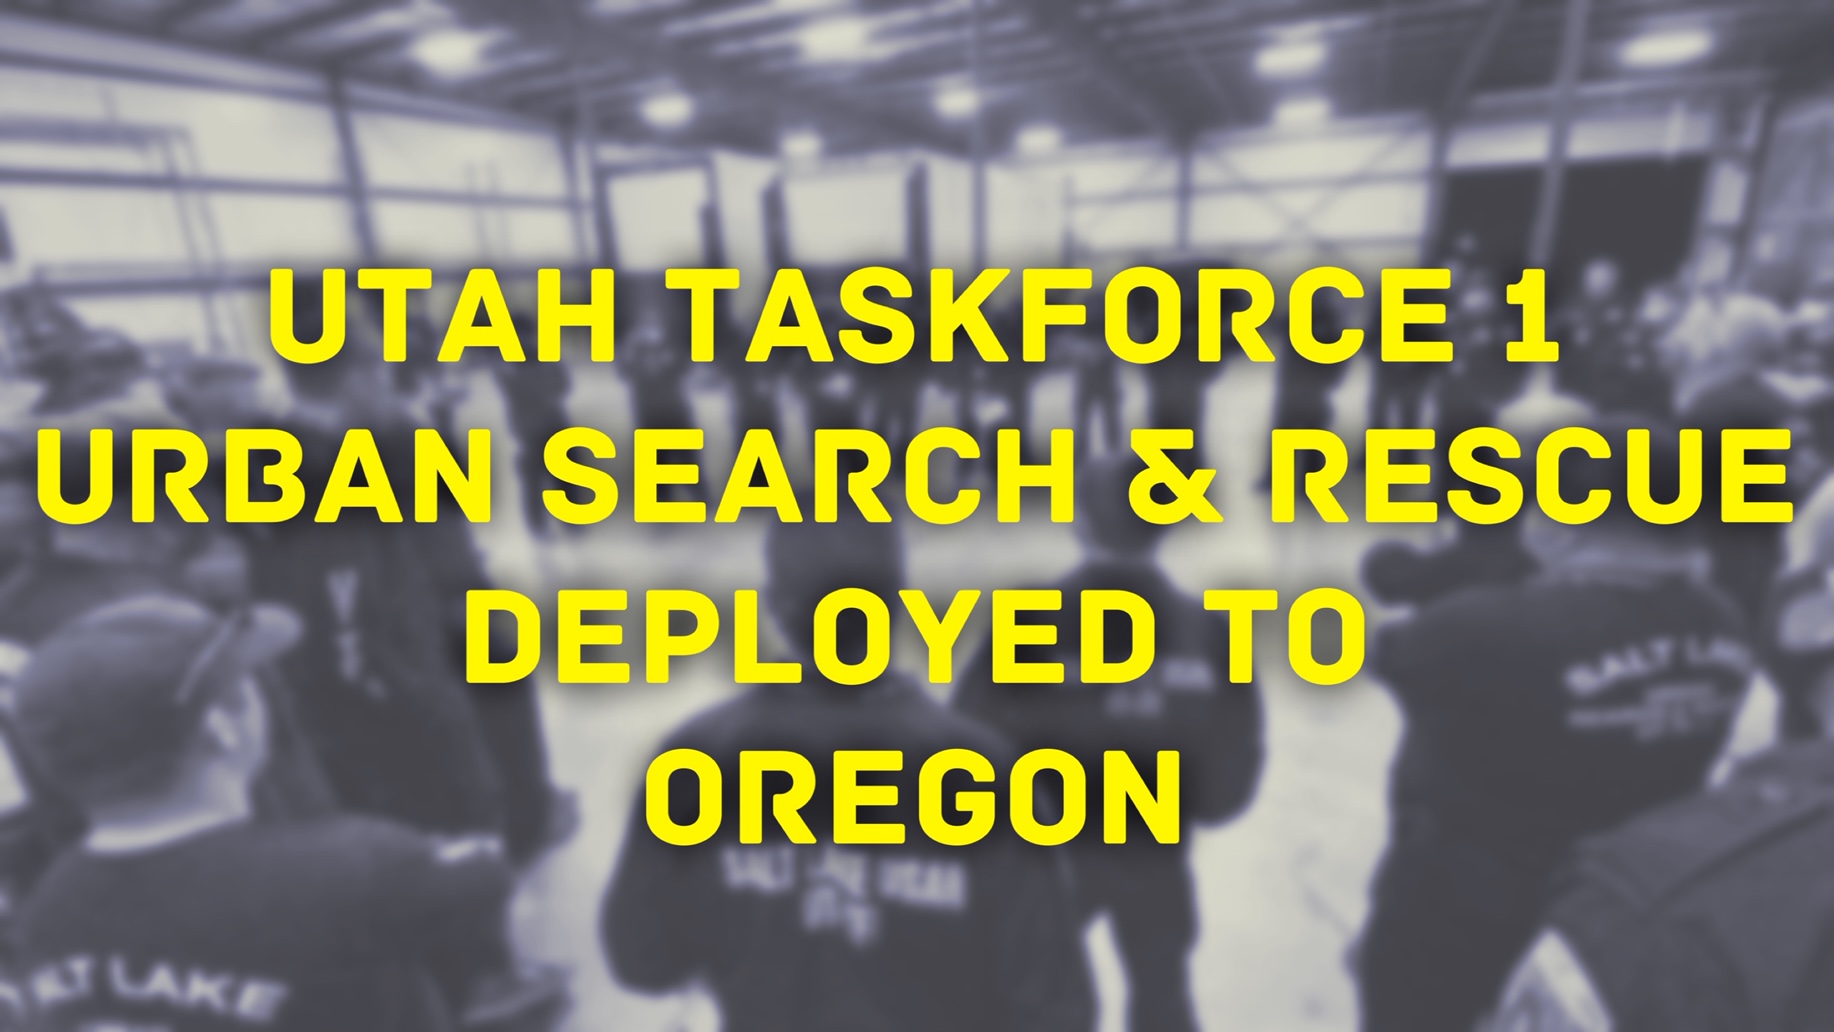 text reads, "utah taskforce 1 urban search & rescue deployed to oregon